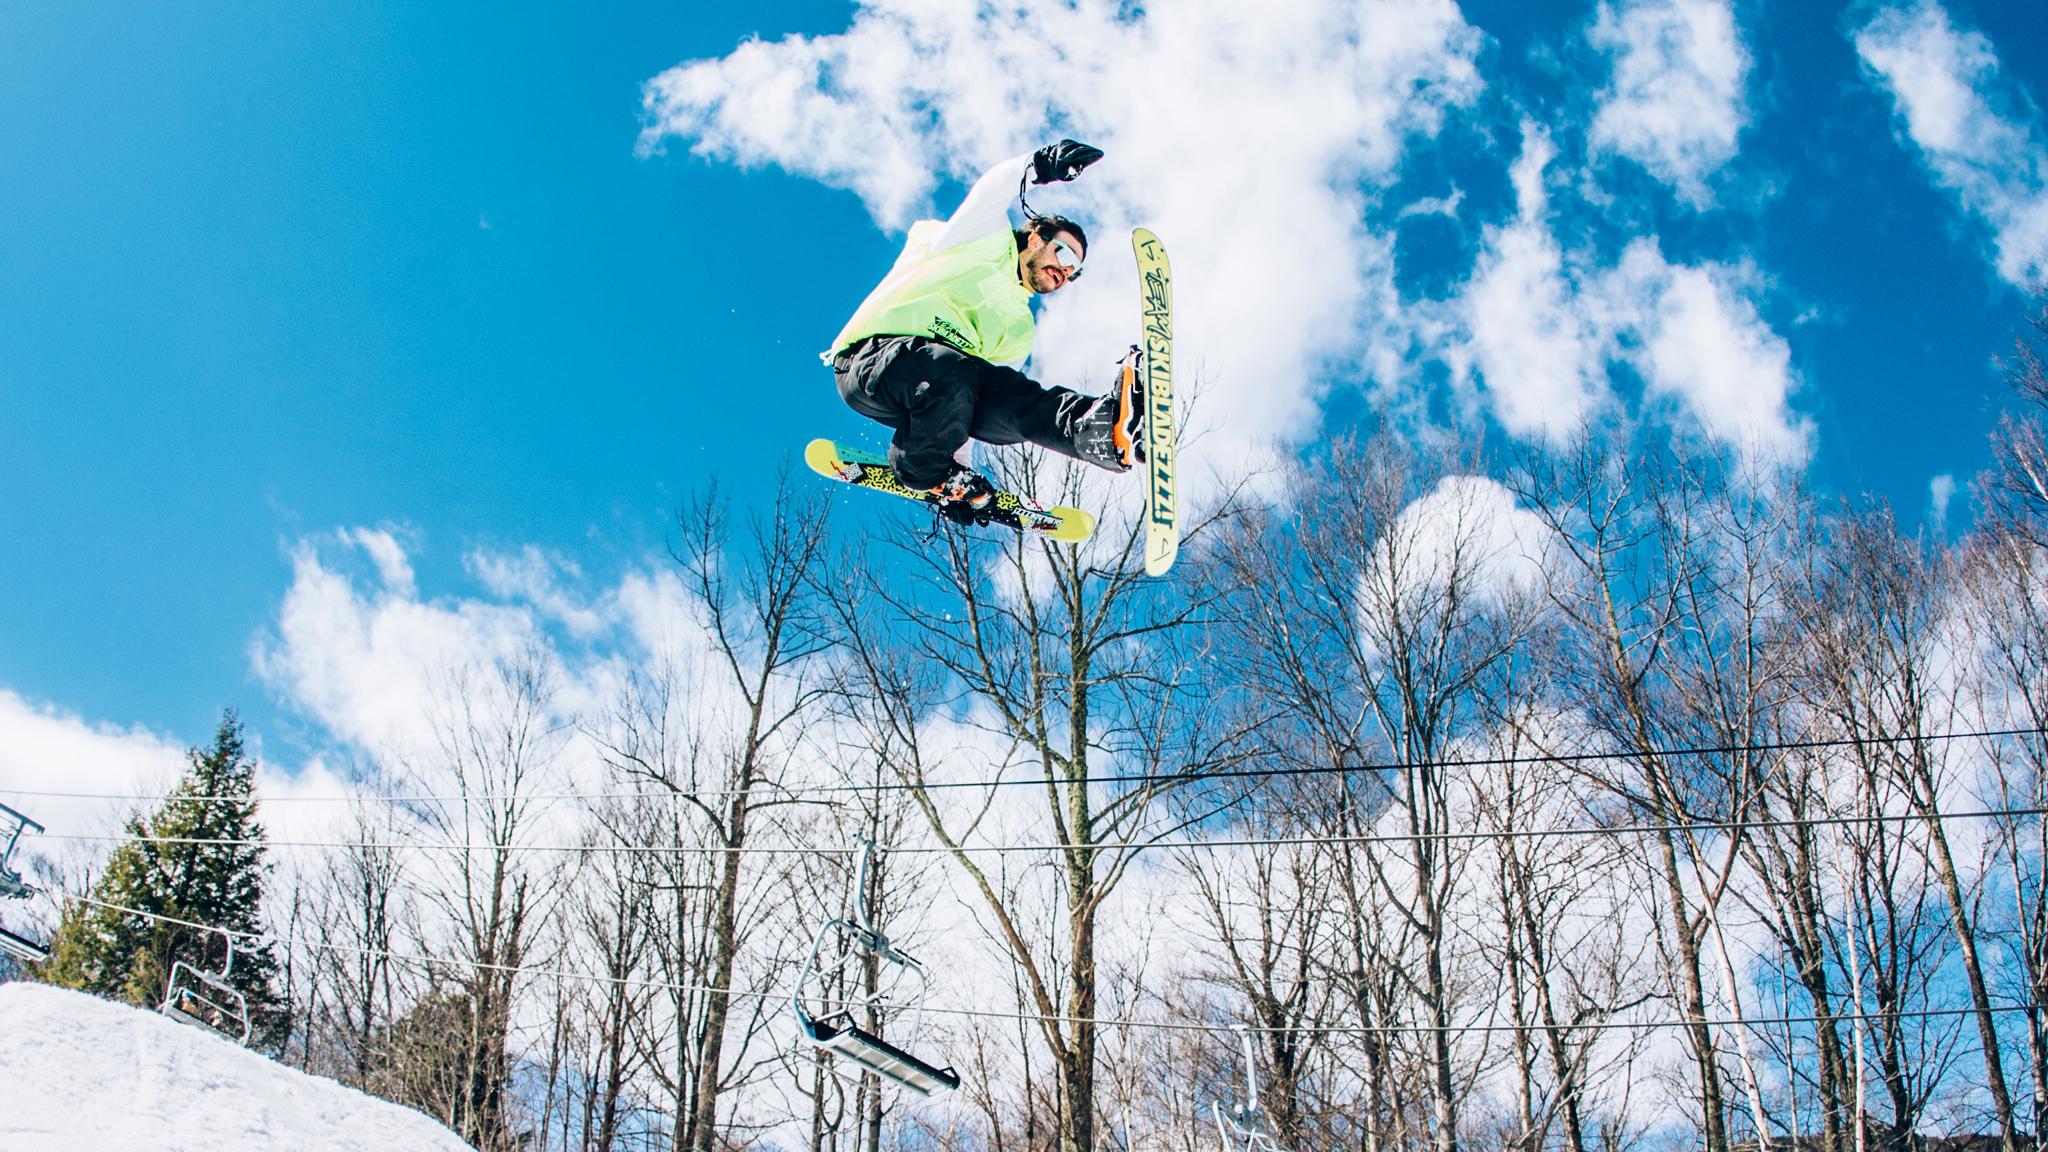 Skier in the air doing a liu-kang grab on the original bright yellow J skis skibladezzz